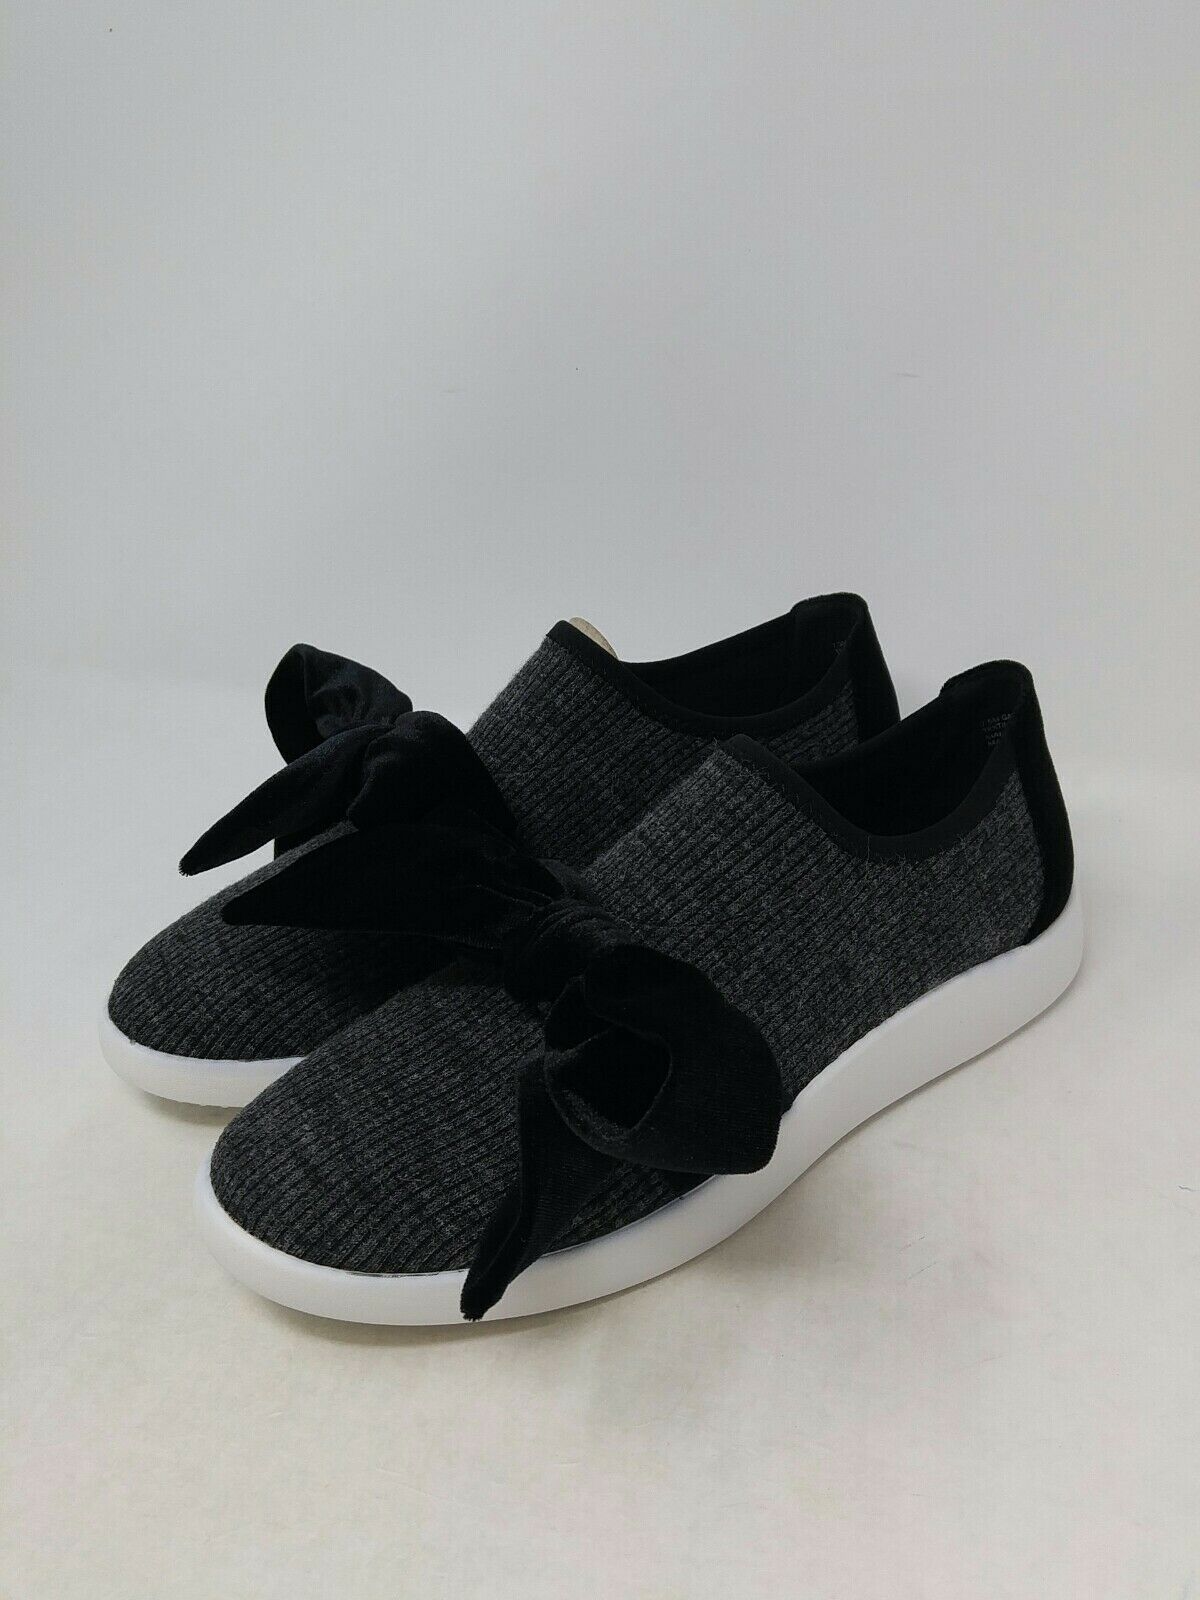 Aerosoles Women's Black/Gray Slip On Shoes Size 7.5 US